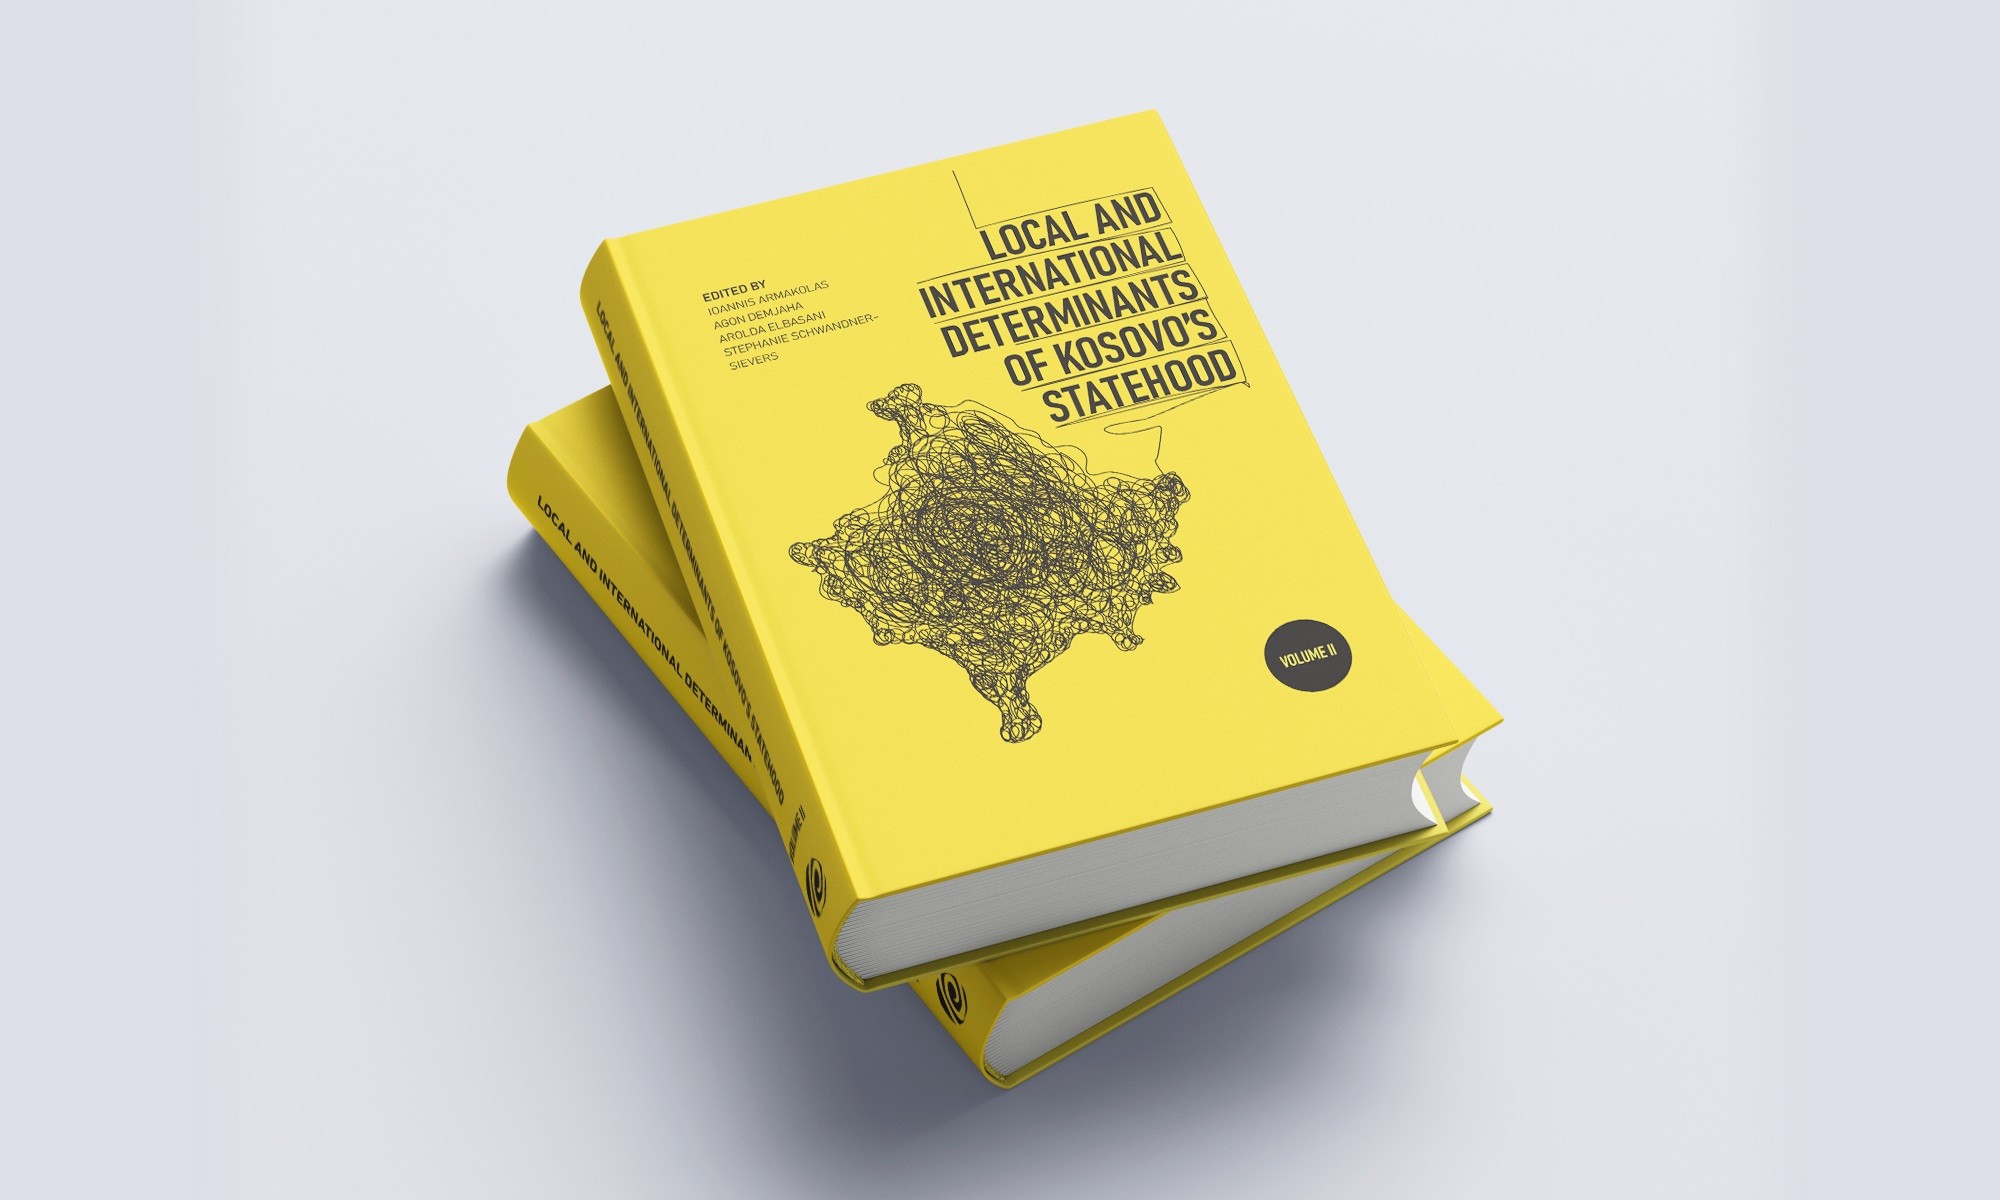 KFOS publikon librin e ri ‘Local and international determinants of Kosovo’s statehood'